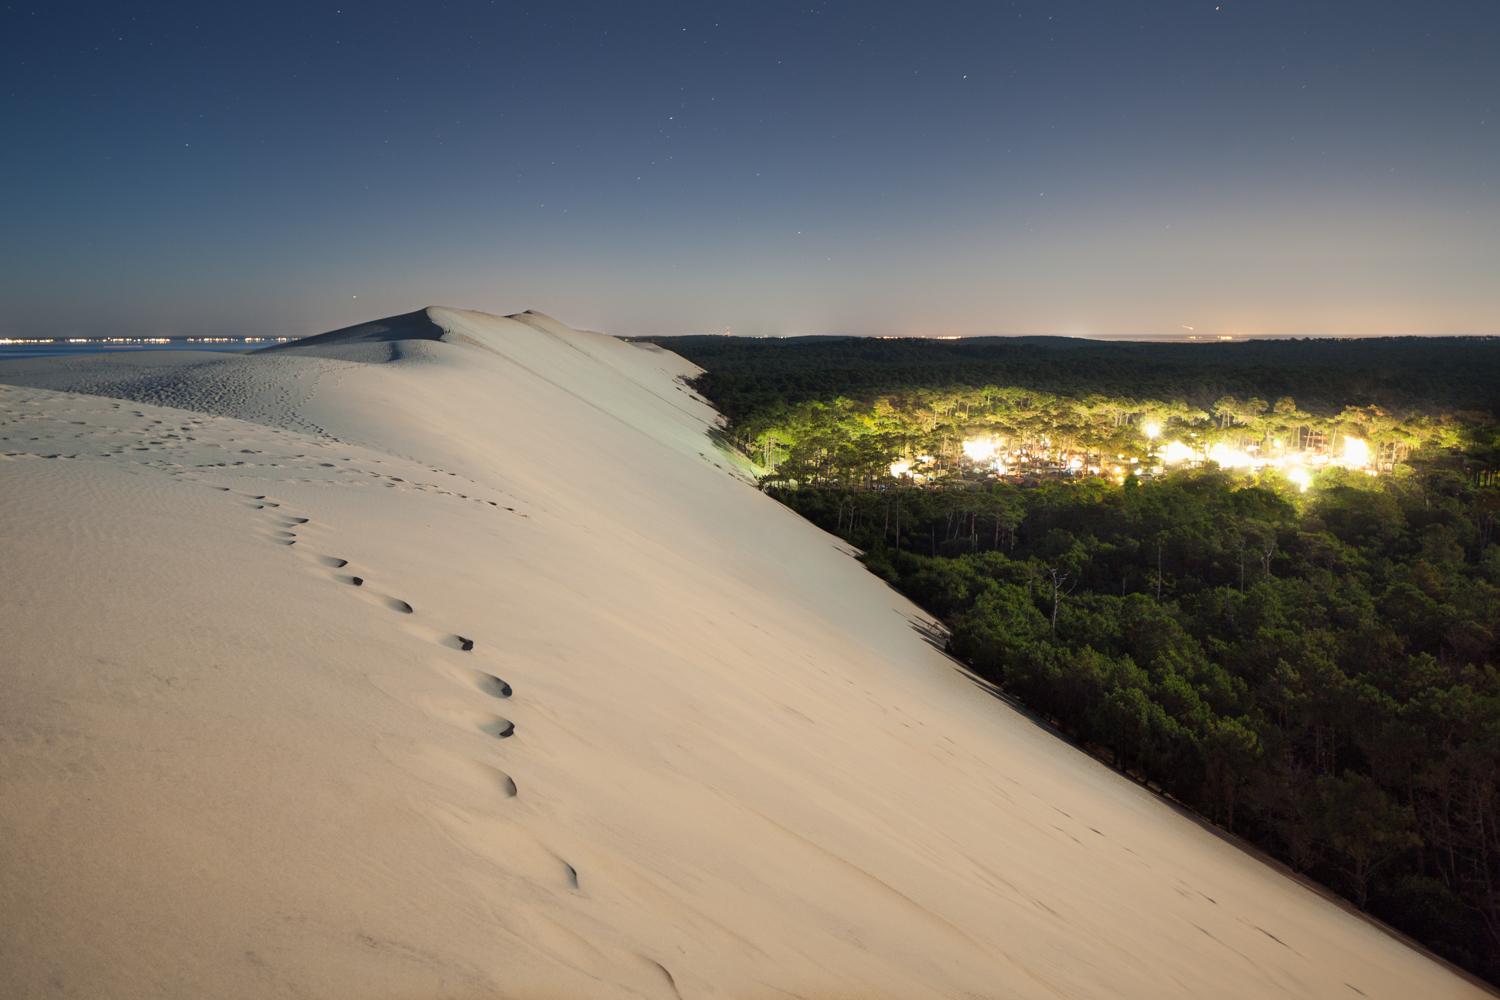 Dune by Xavier Dumoulin - Night fine art photography, landscape, nature